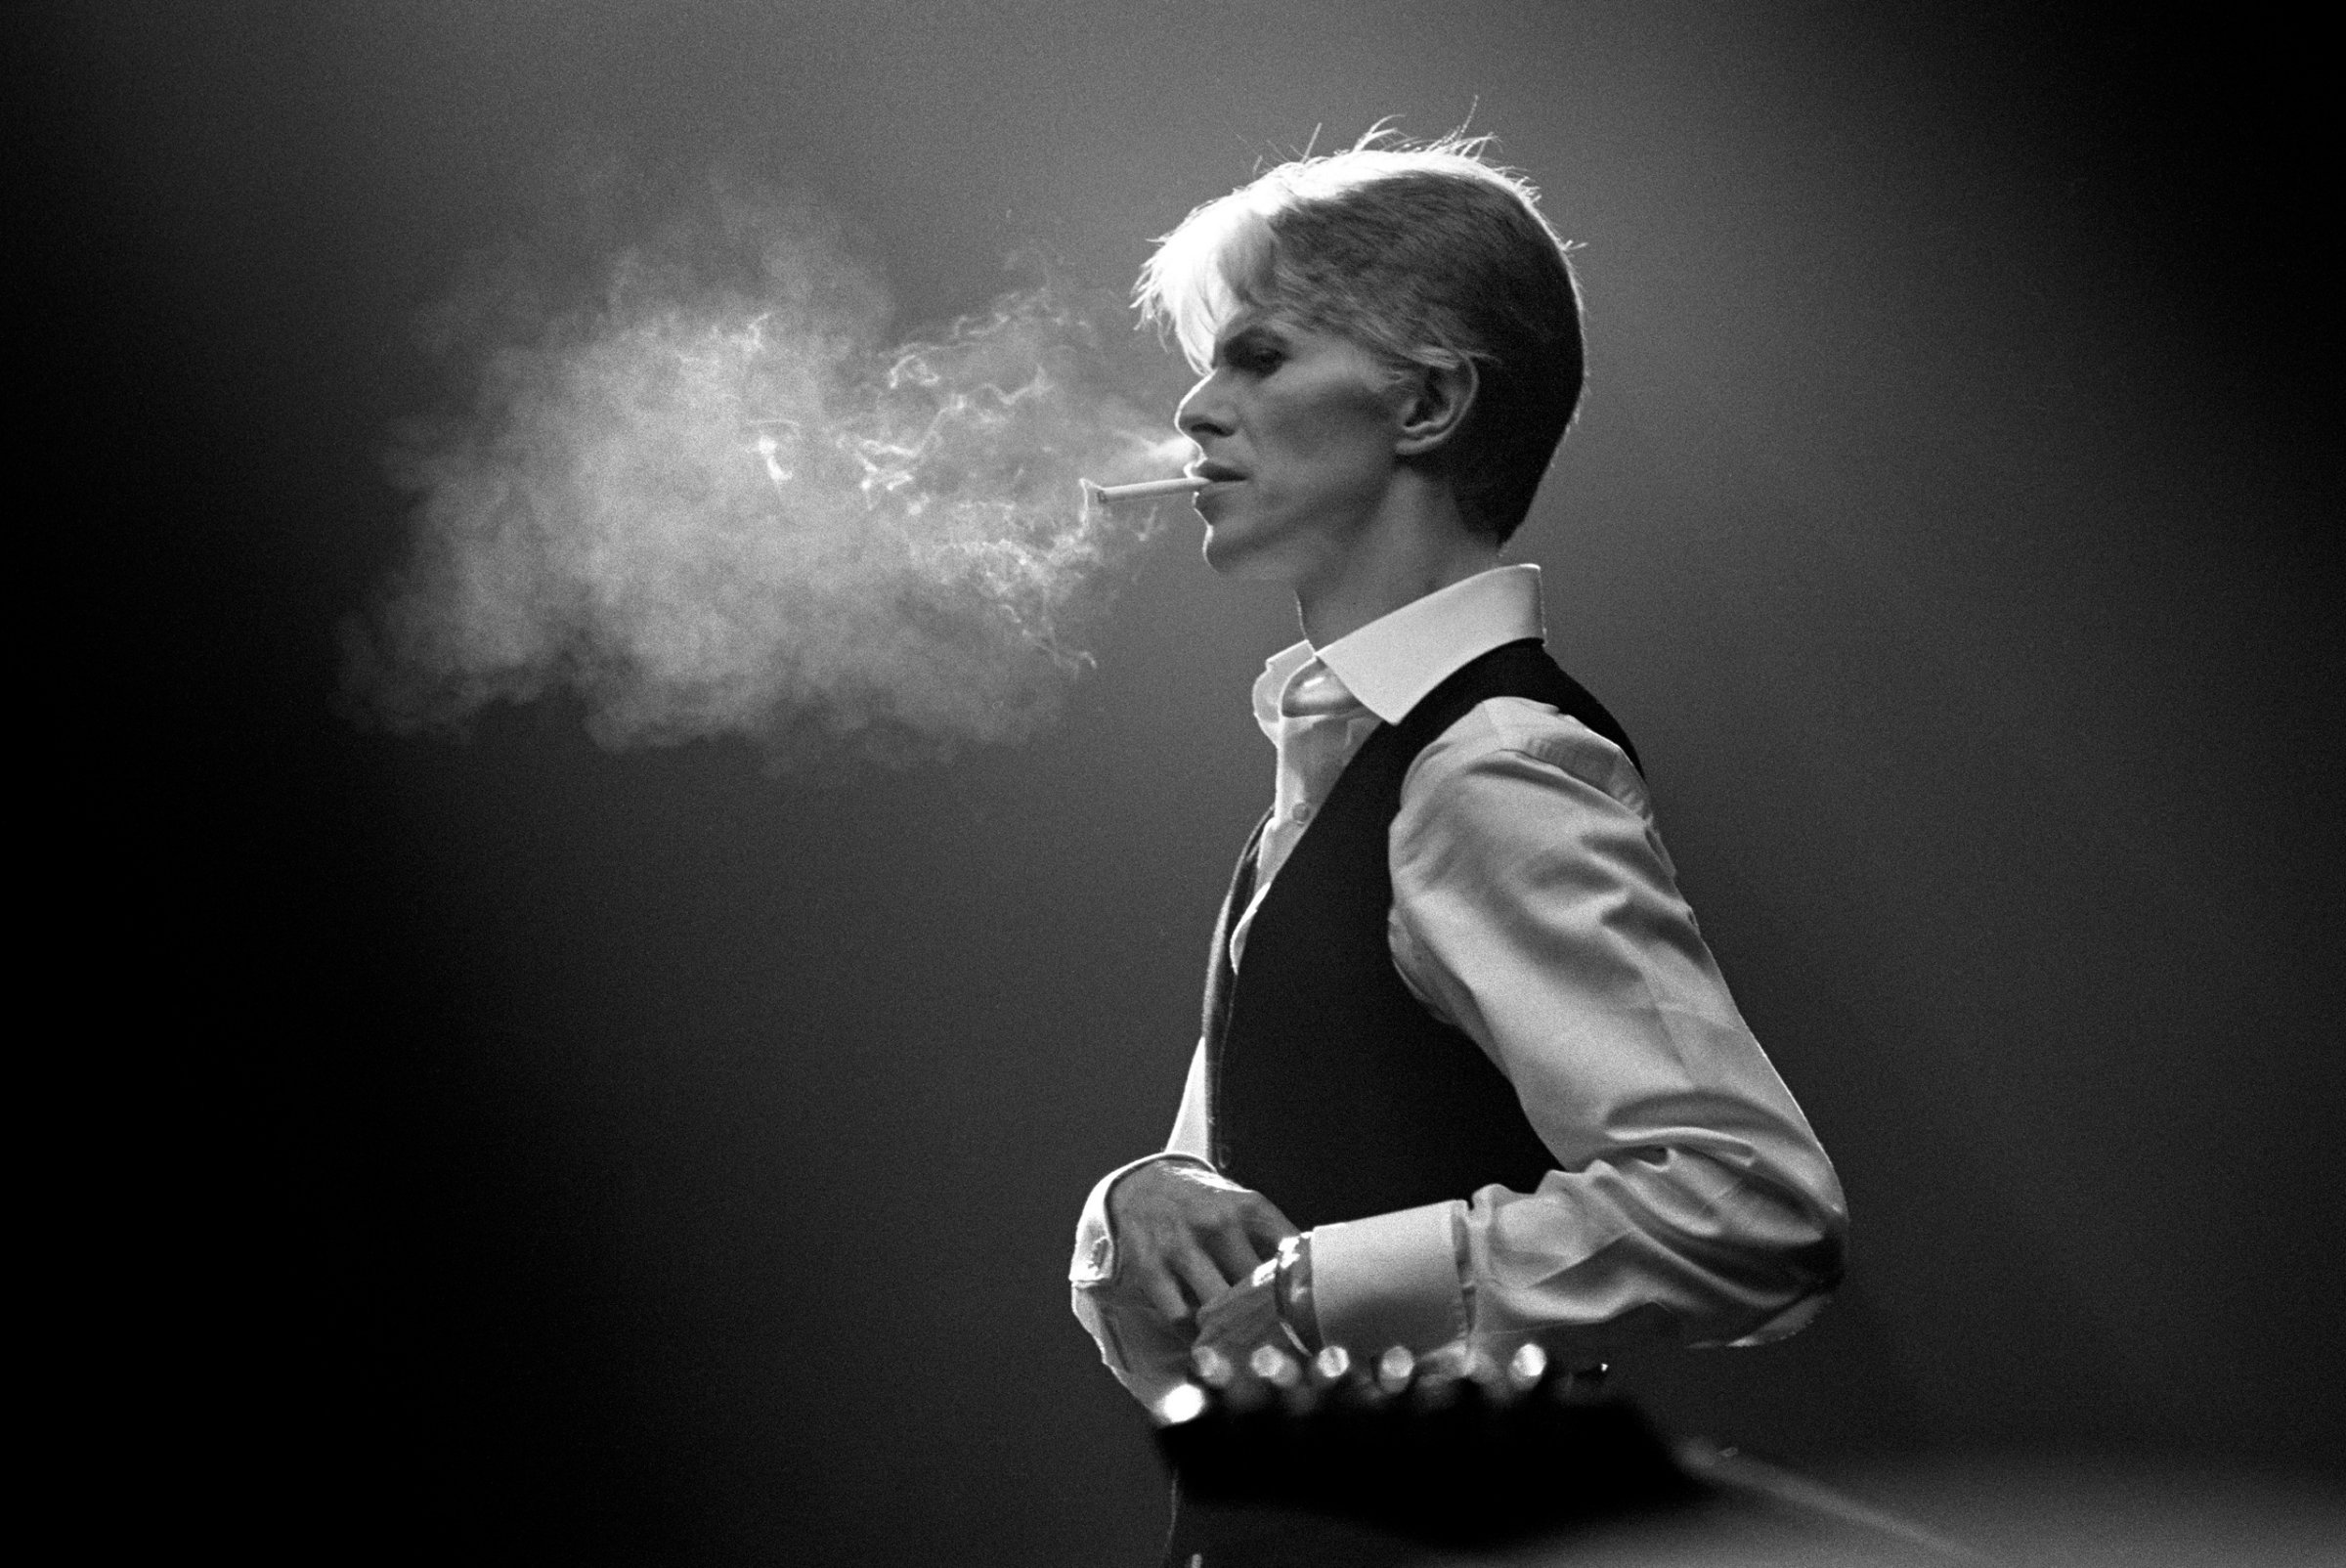 Bowie's Thin White Duke persona, smoking a Gitanes cigarette, 1976.